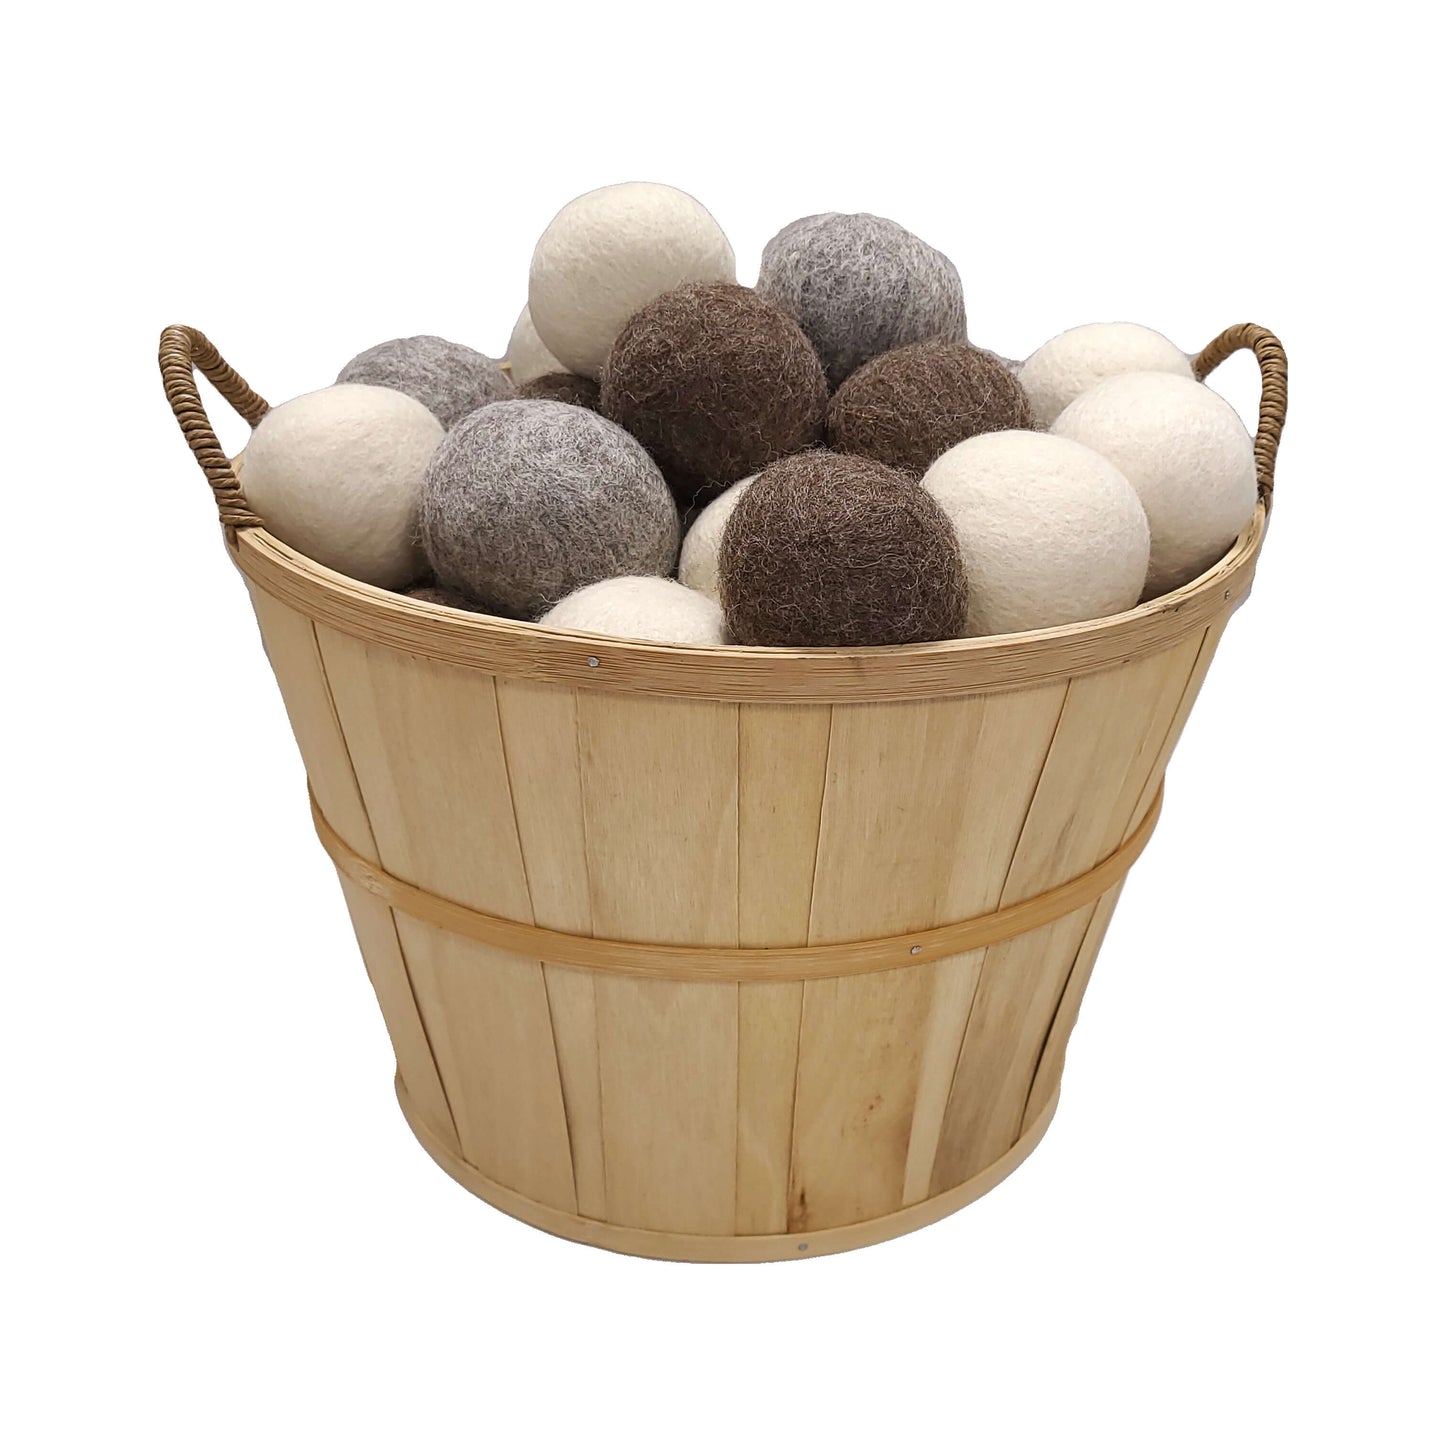 Basket of sustainable wool dryer balls